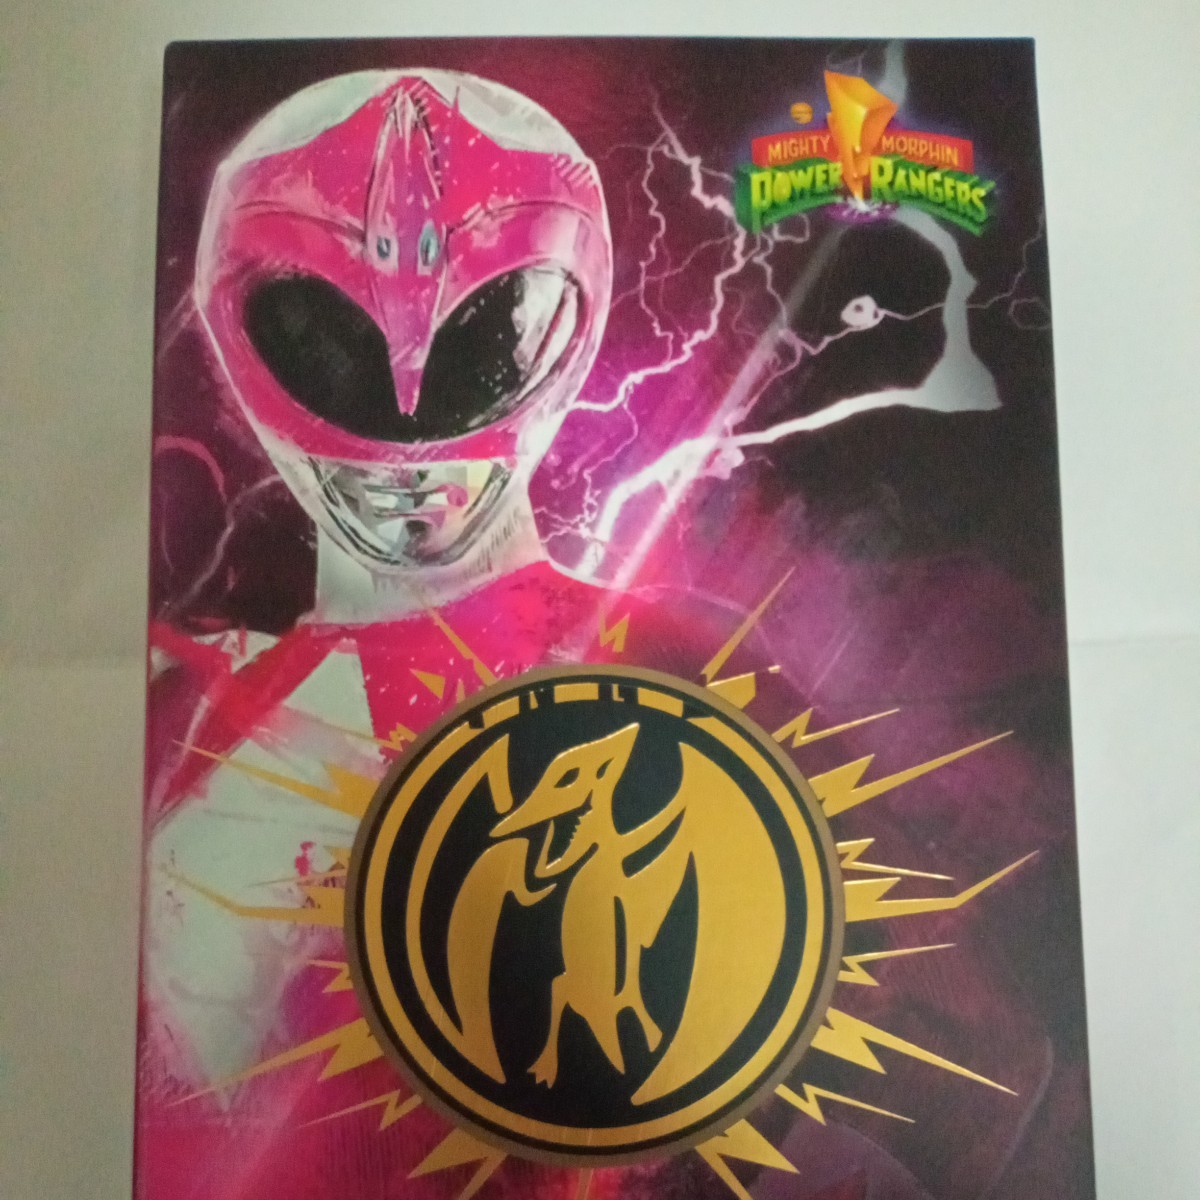  is zbrothreezerofig Zero Power Ranger pink Ranger p tera Ranger not yet sale in Japan goods super Squadron 